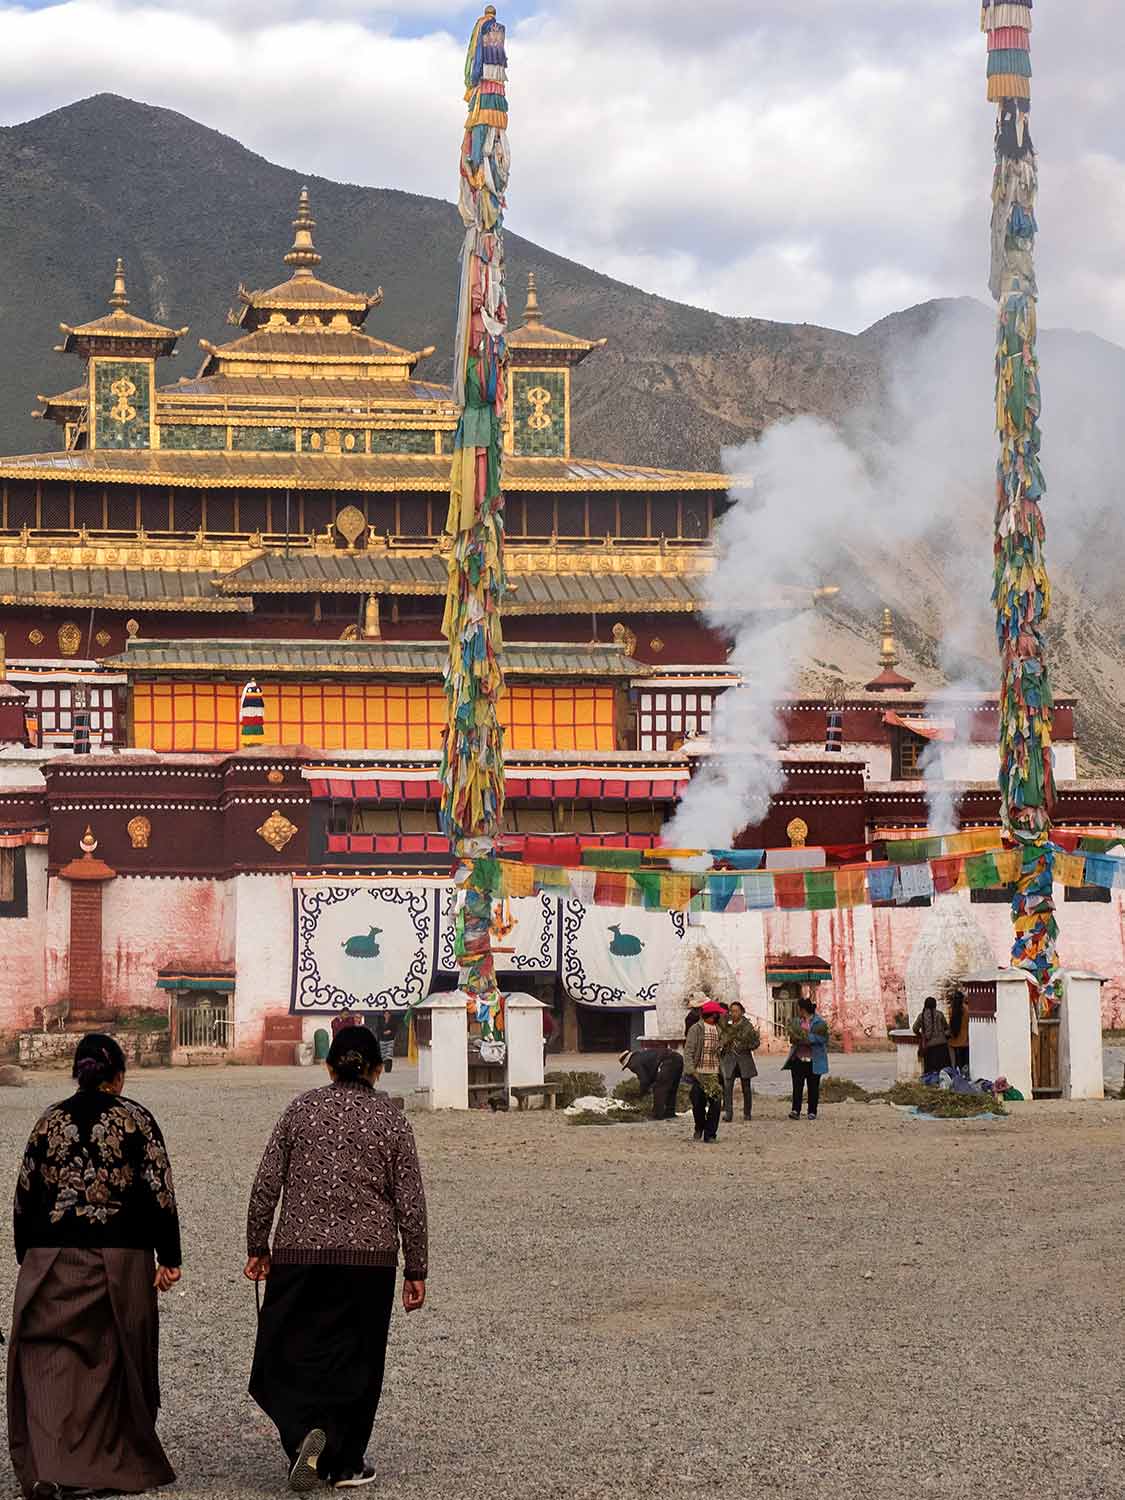 Photograph of Samye monastery, Tibet